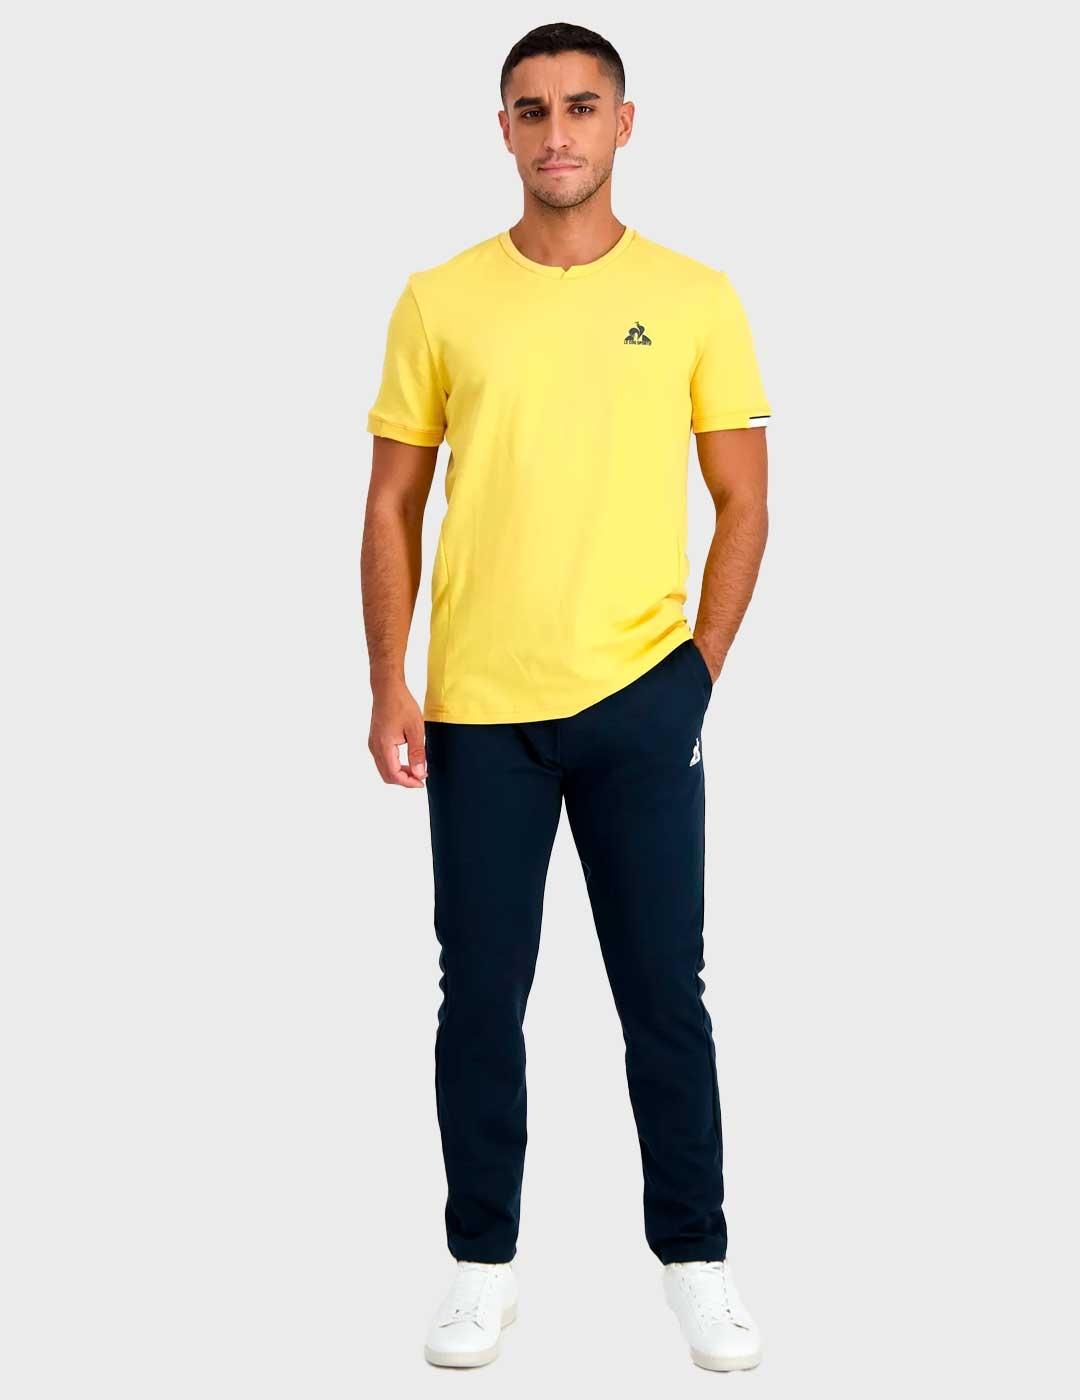 Camiseta Le Coq Sportif Terre Battue 83 amarilla para hombre